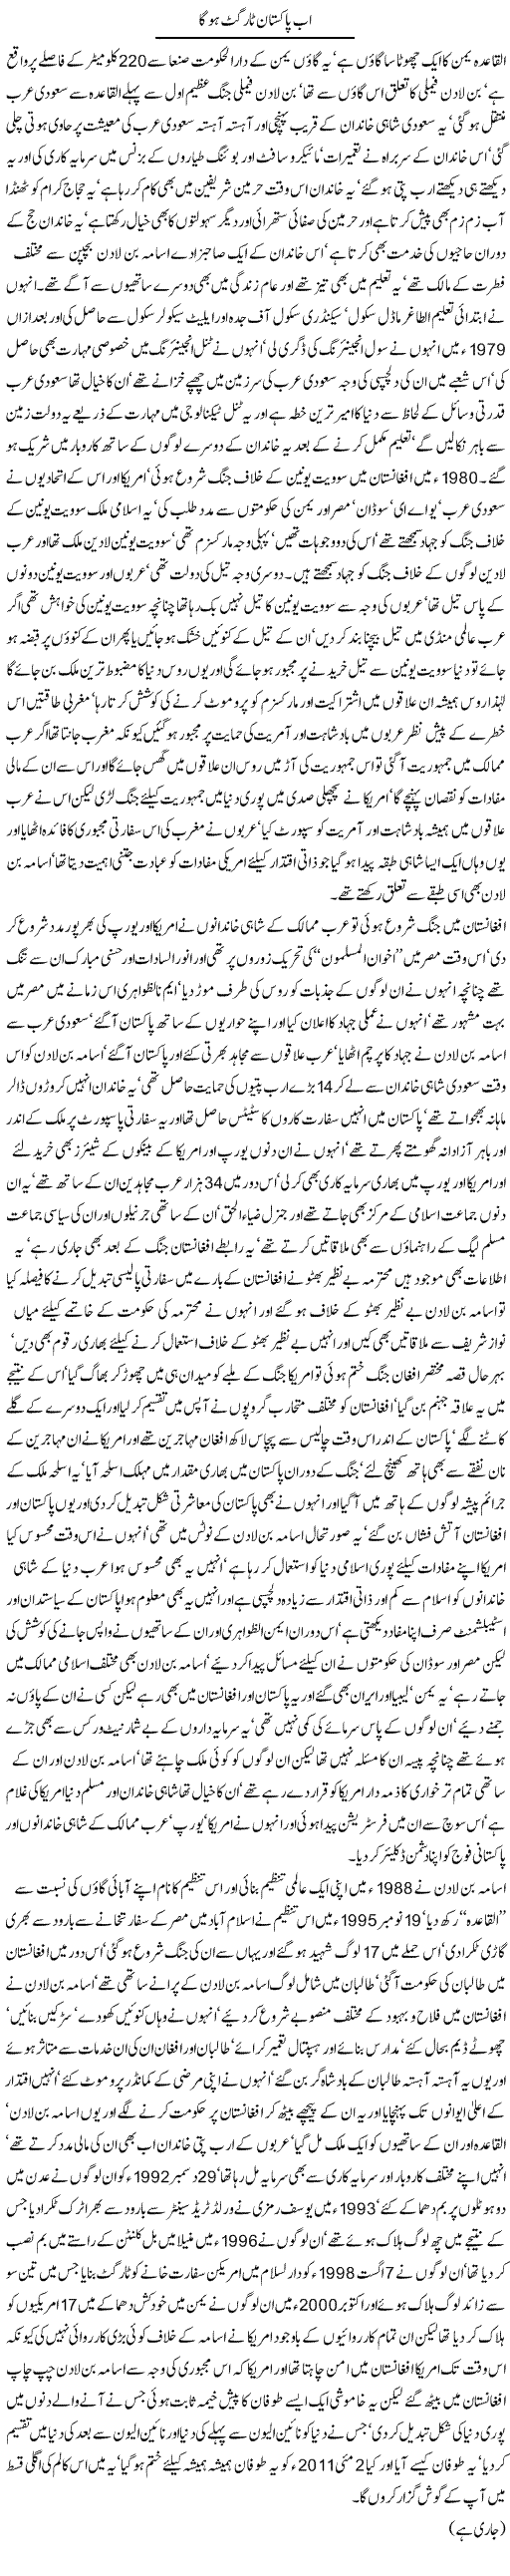 Ab Pakistan target ho ga – Javed Chaudhry